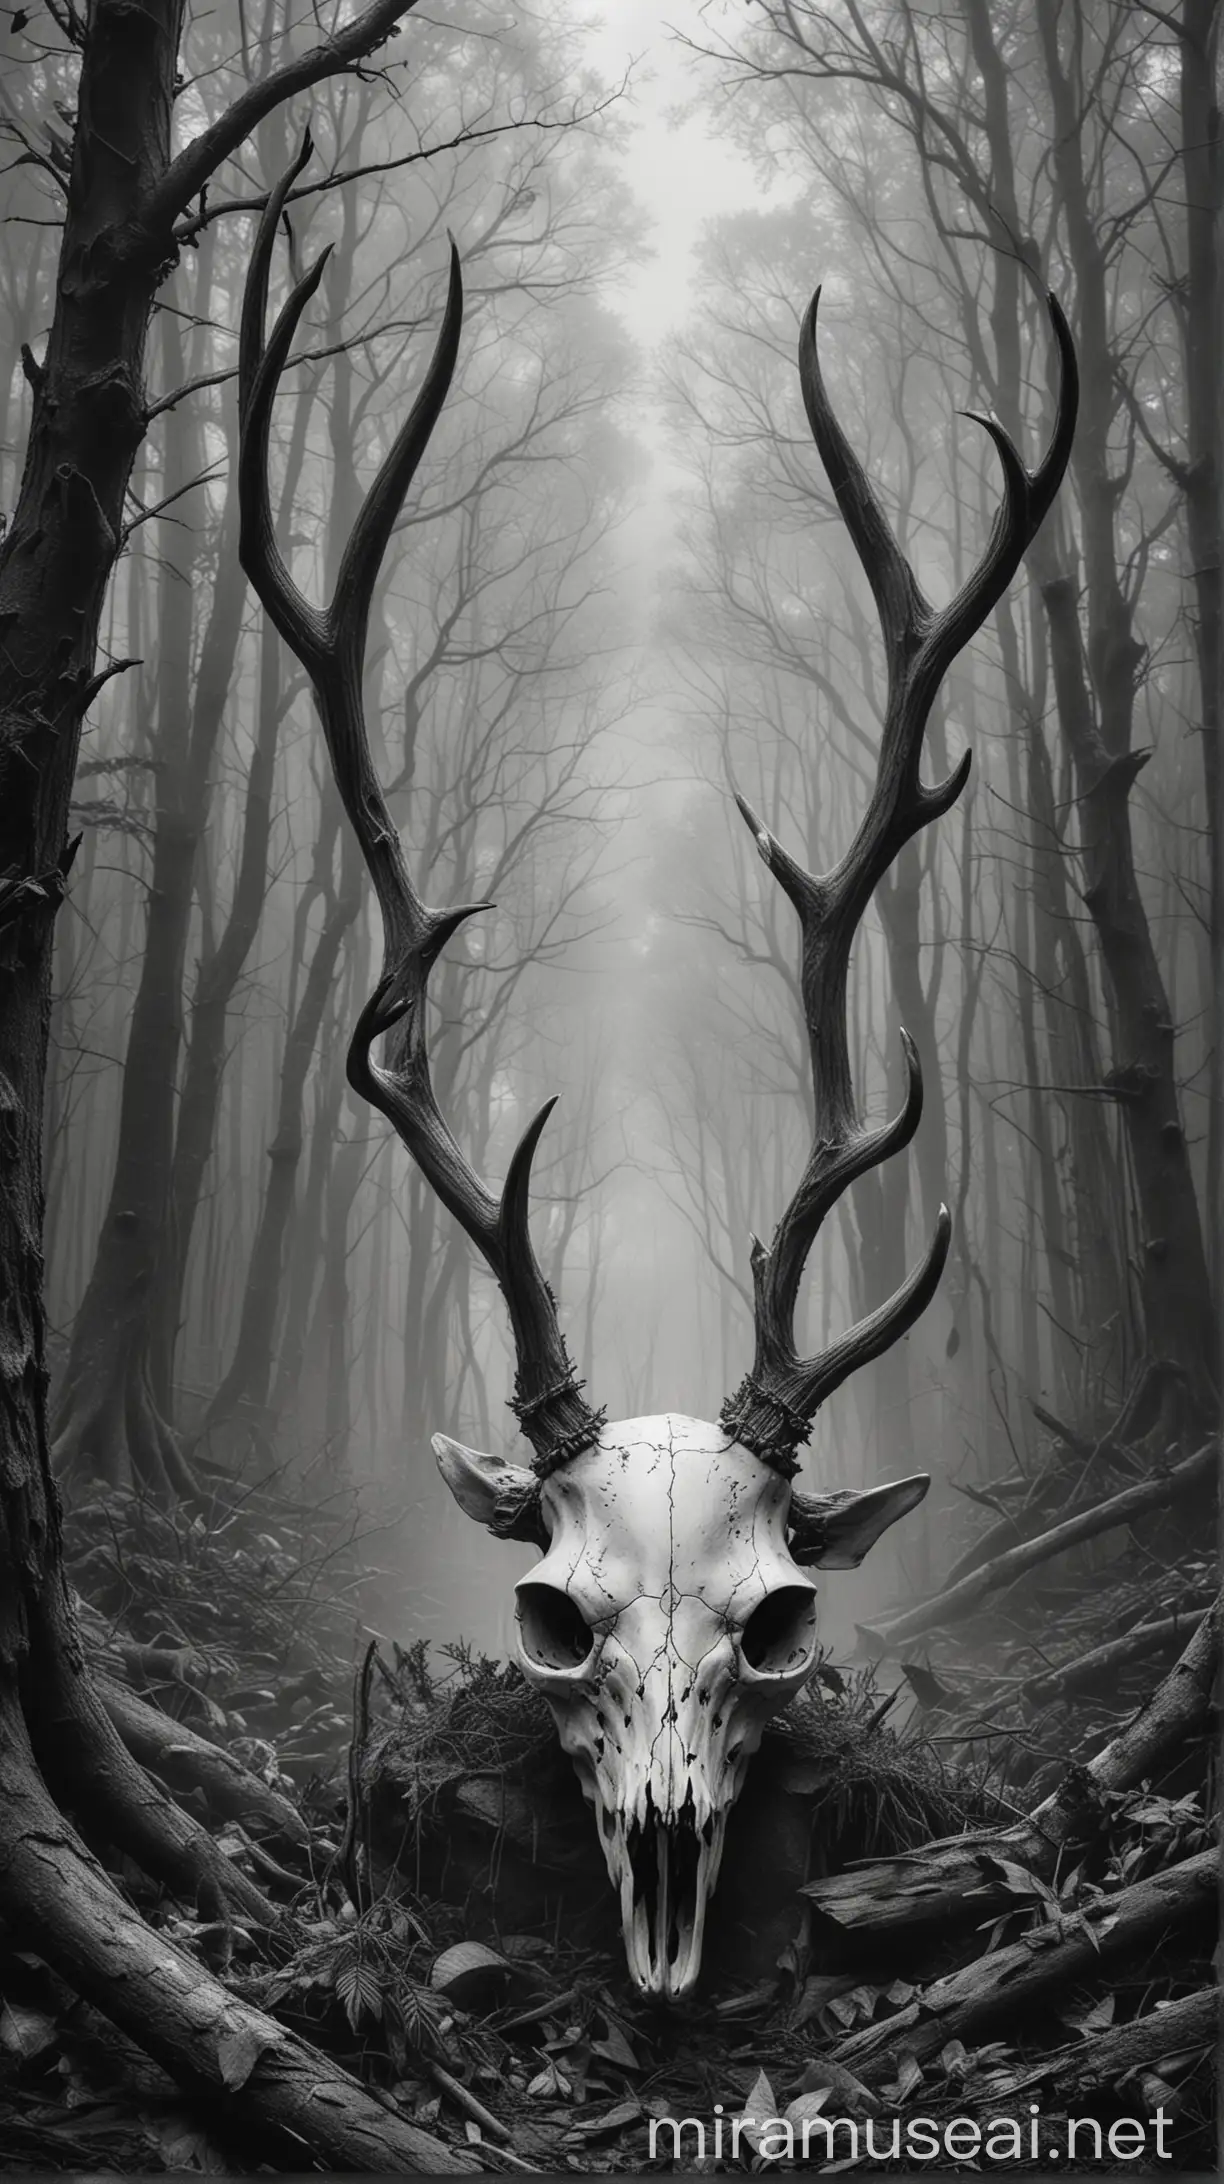 Eerie Deer Skull Art Black and White Sketch in Misty Forest